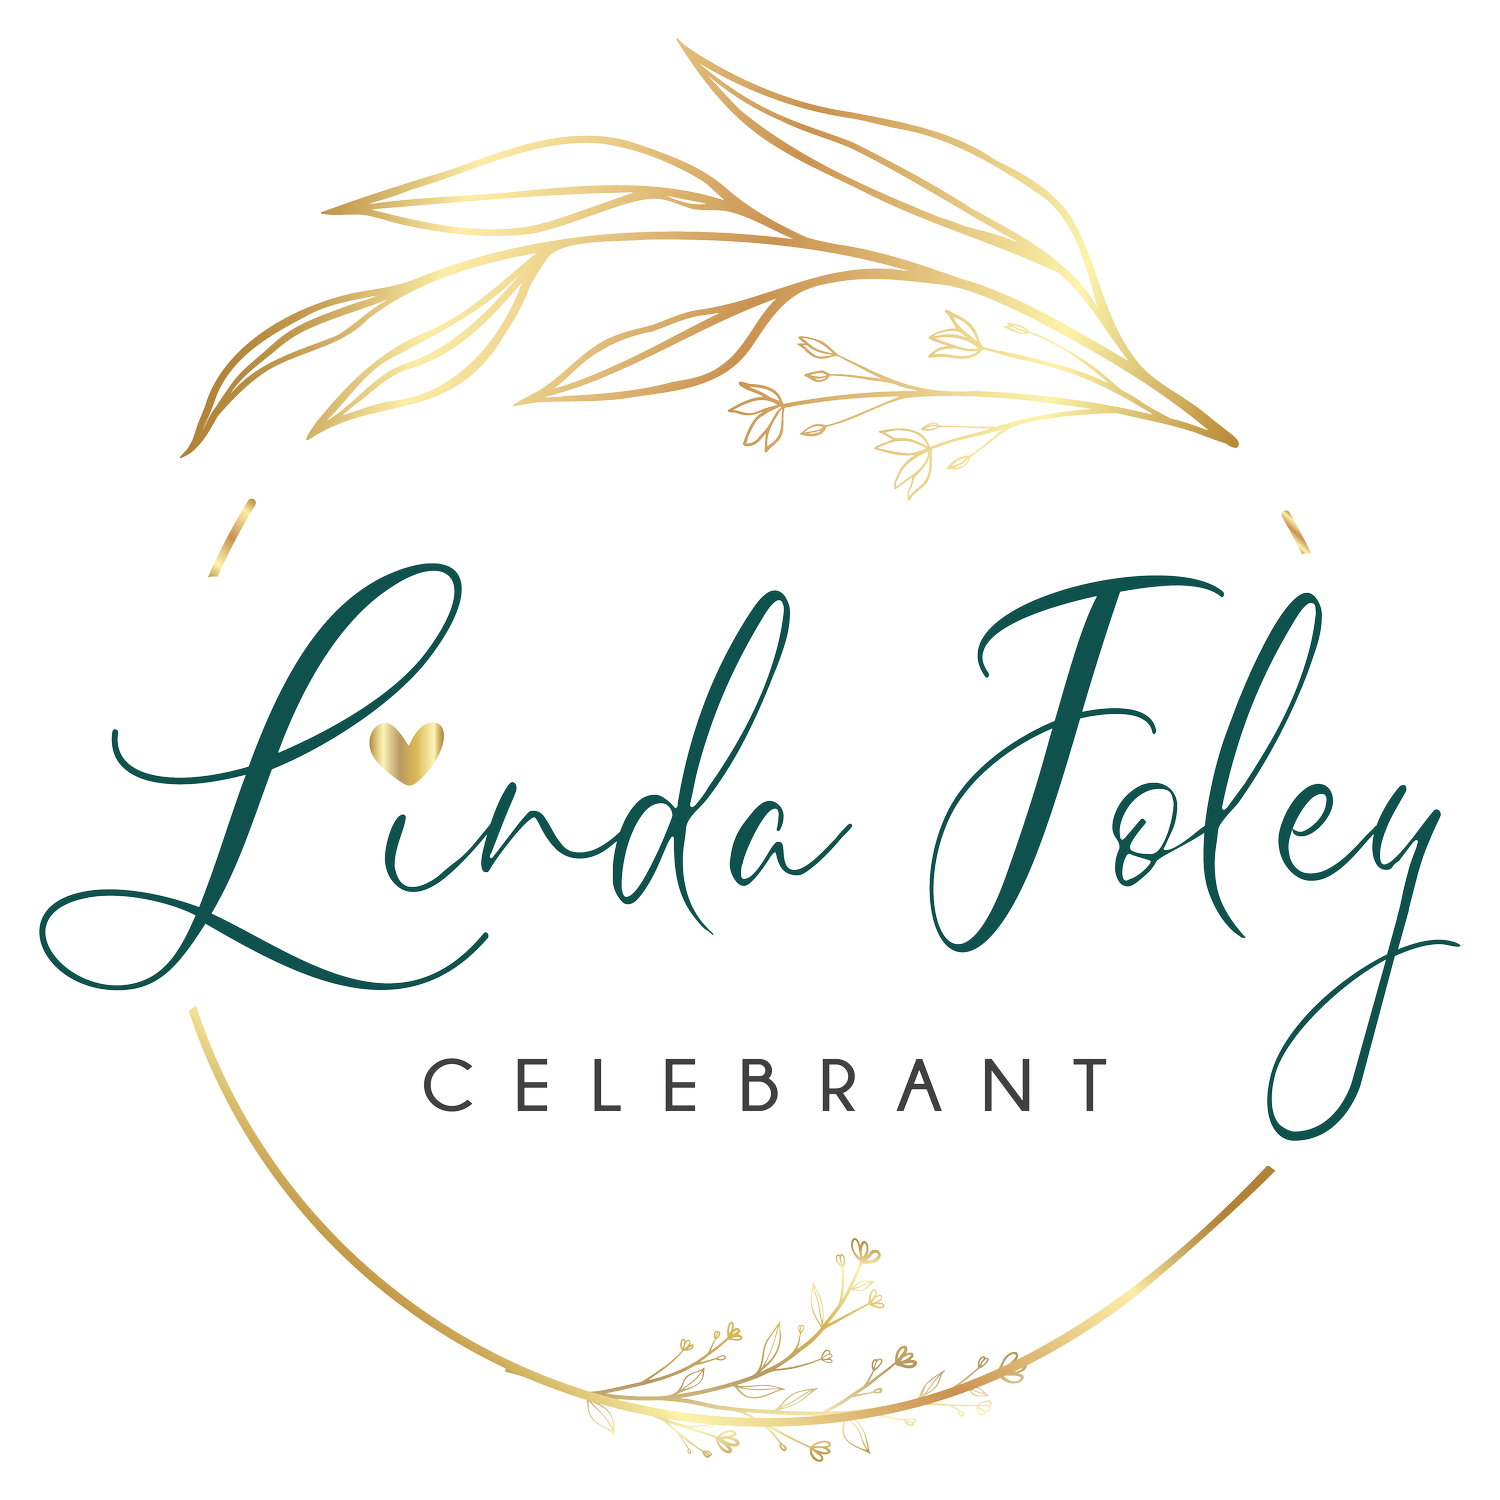 Linda Foley Celebrant